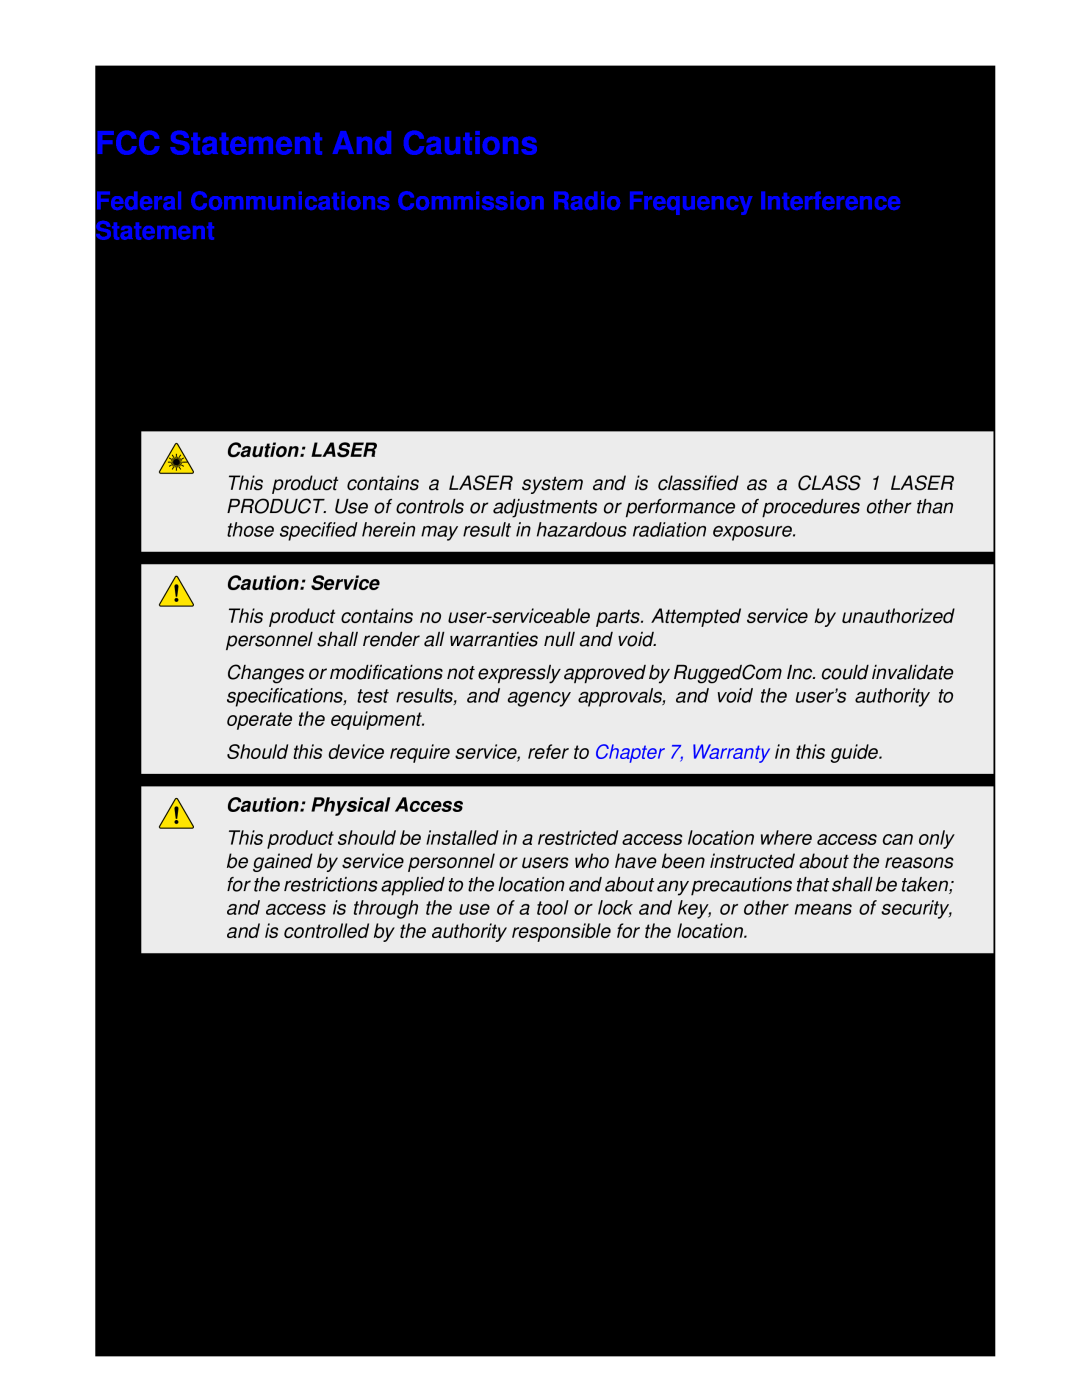 RuggedCom RX1510 manual FCC Statement And Cautions, Caution LASER, Caution Service, Caution Physical Access 